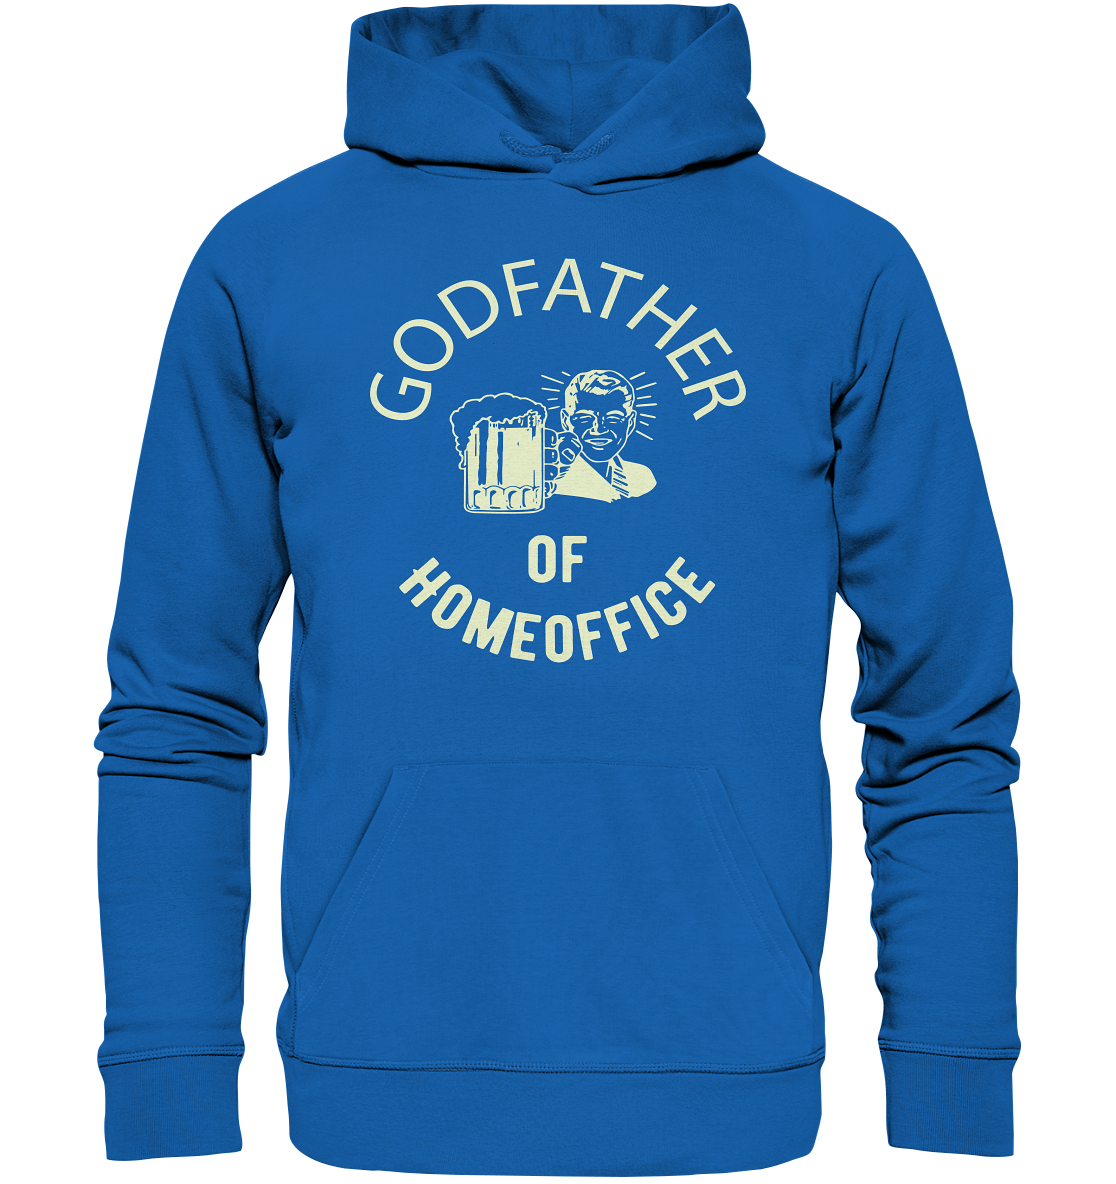 Godfather of Homeoffice - Premium Unisex Hoodie